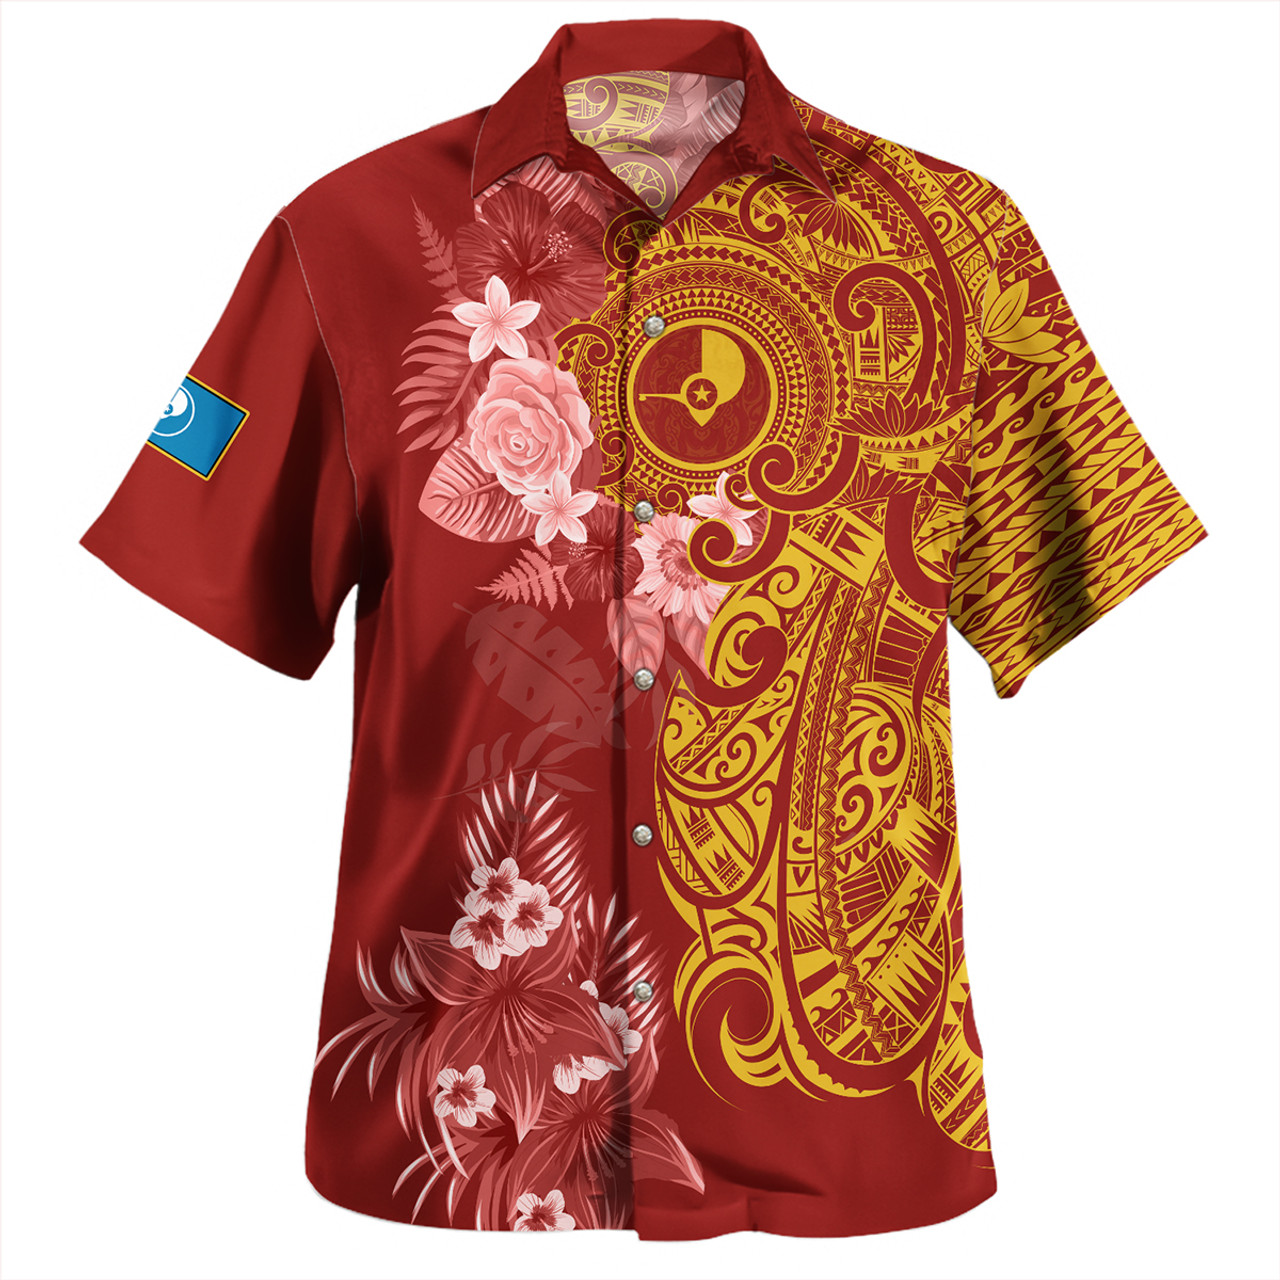 Yap State Combo Puletasi And Shirt Polynesian Tropical Plumeria Tribal Red